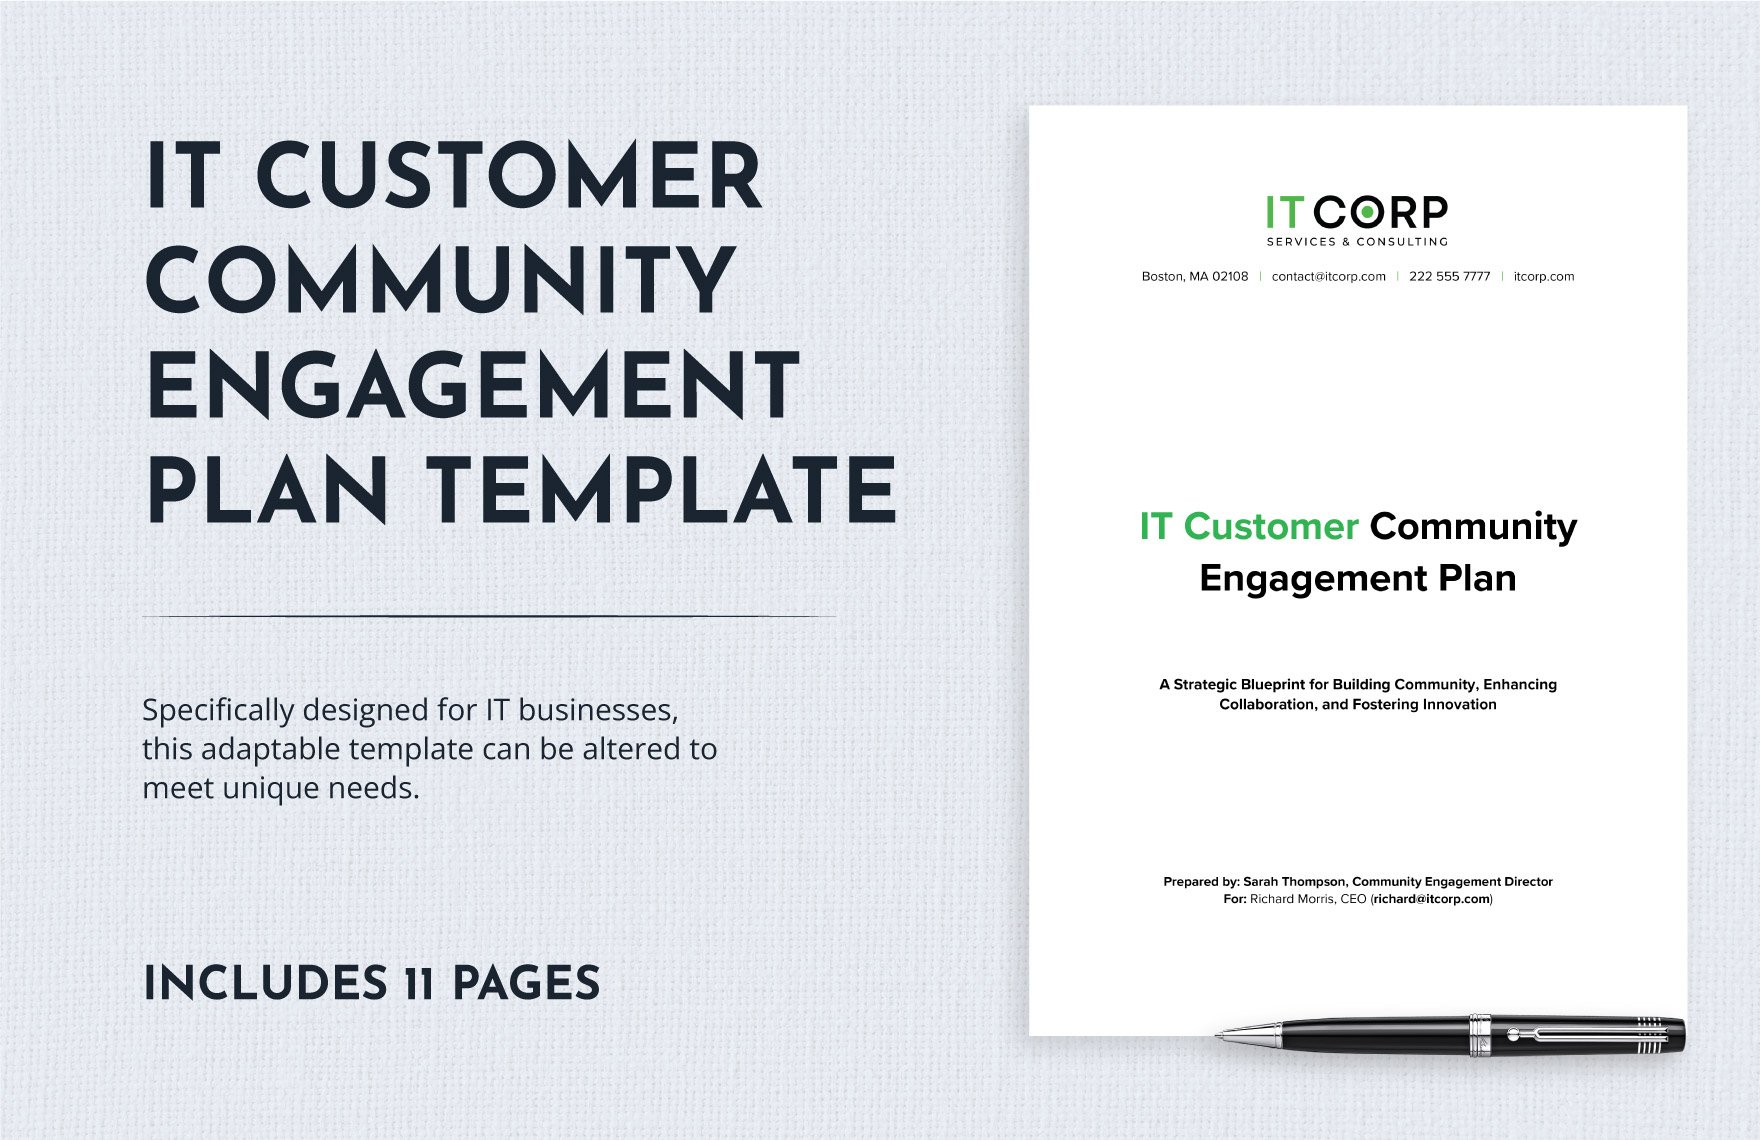 IT Customer Community Engagement Plan Template